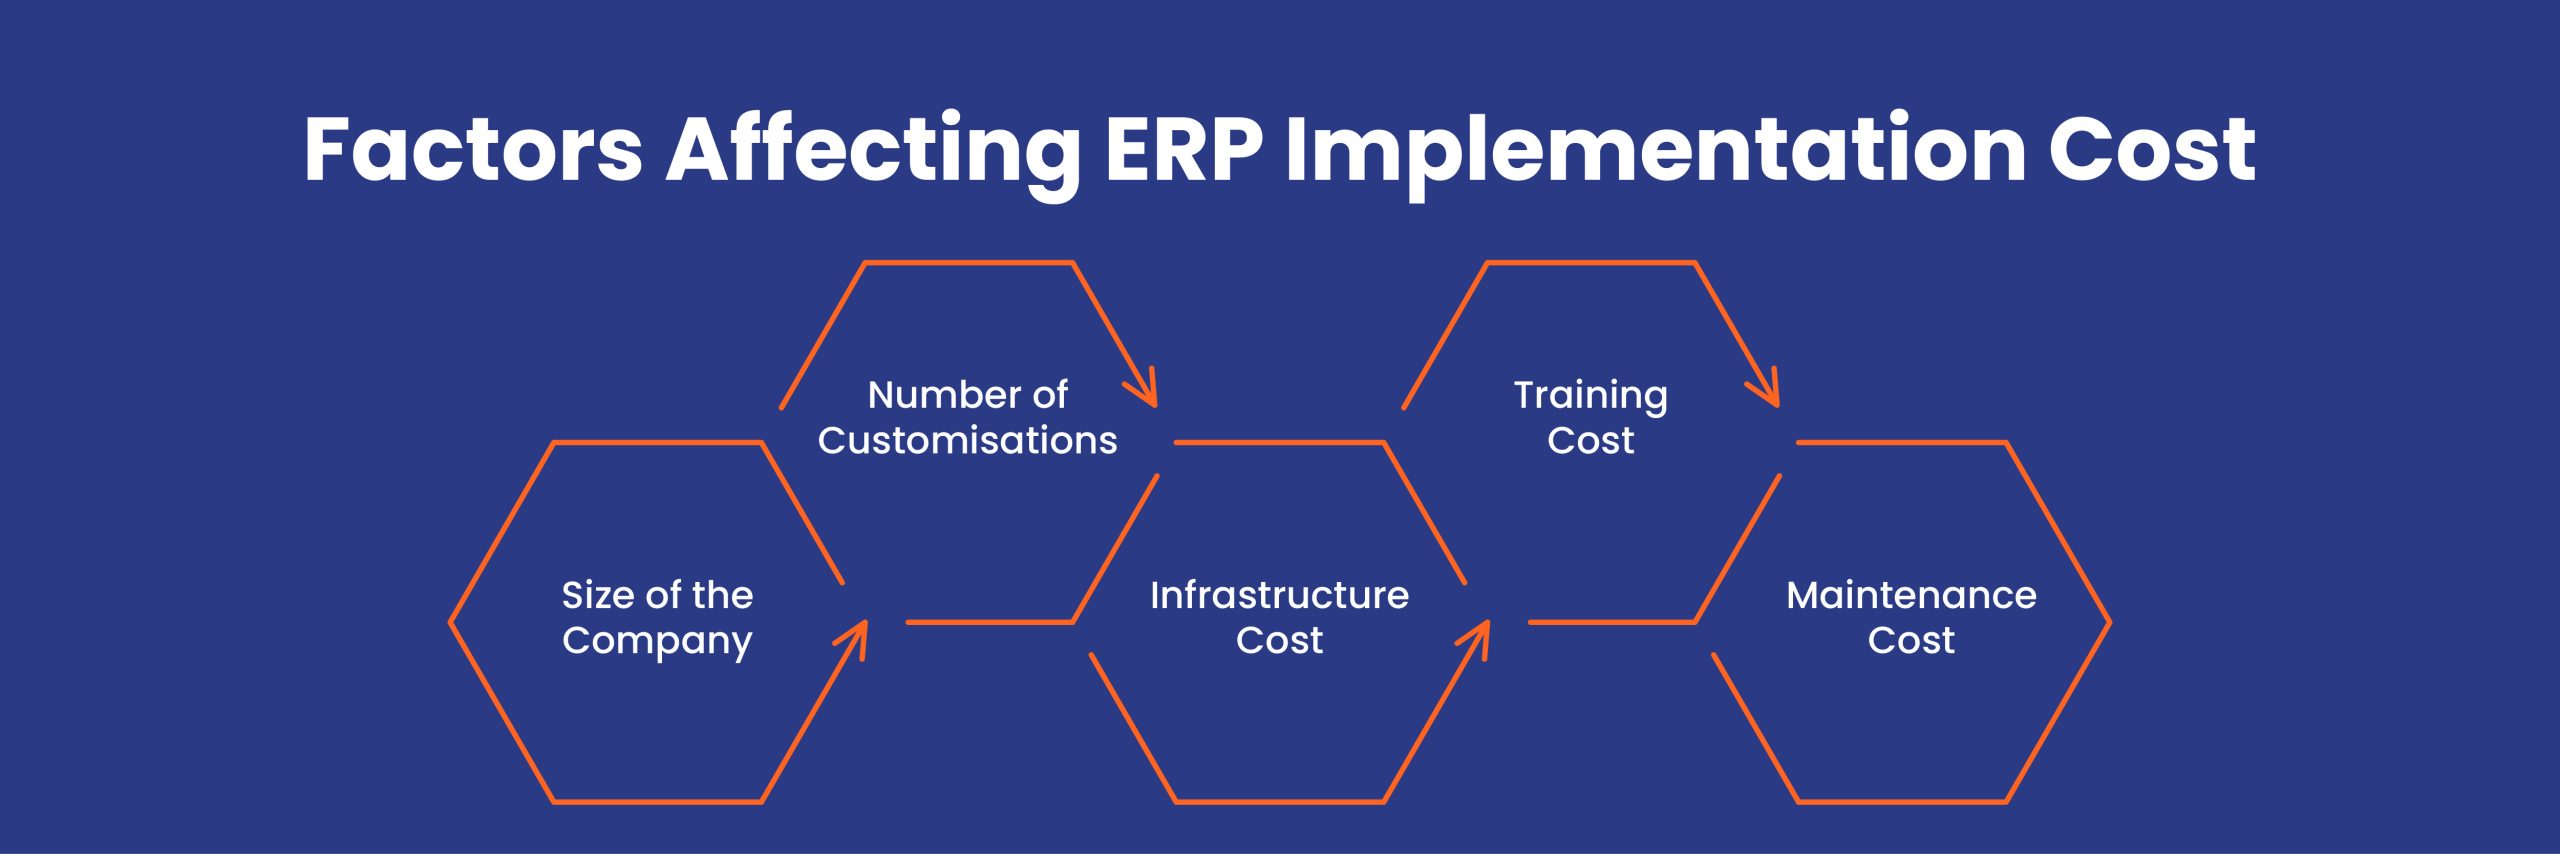 Factors Affecting ERP Implementation Cost